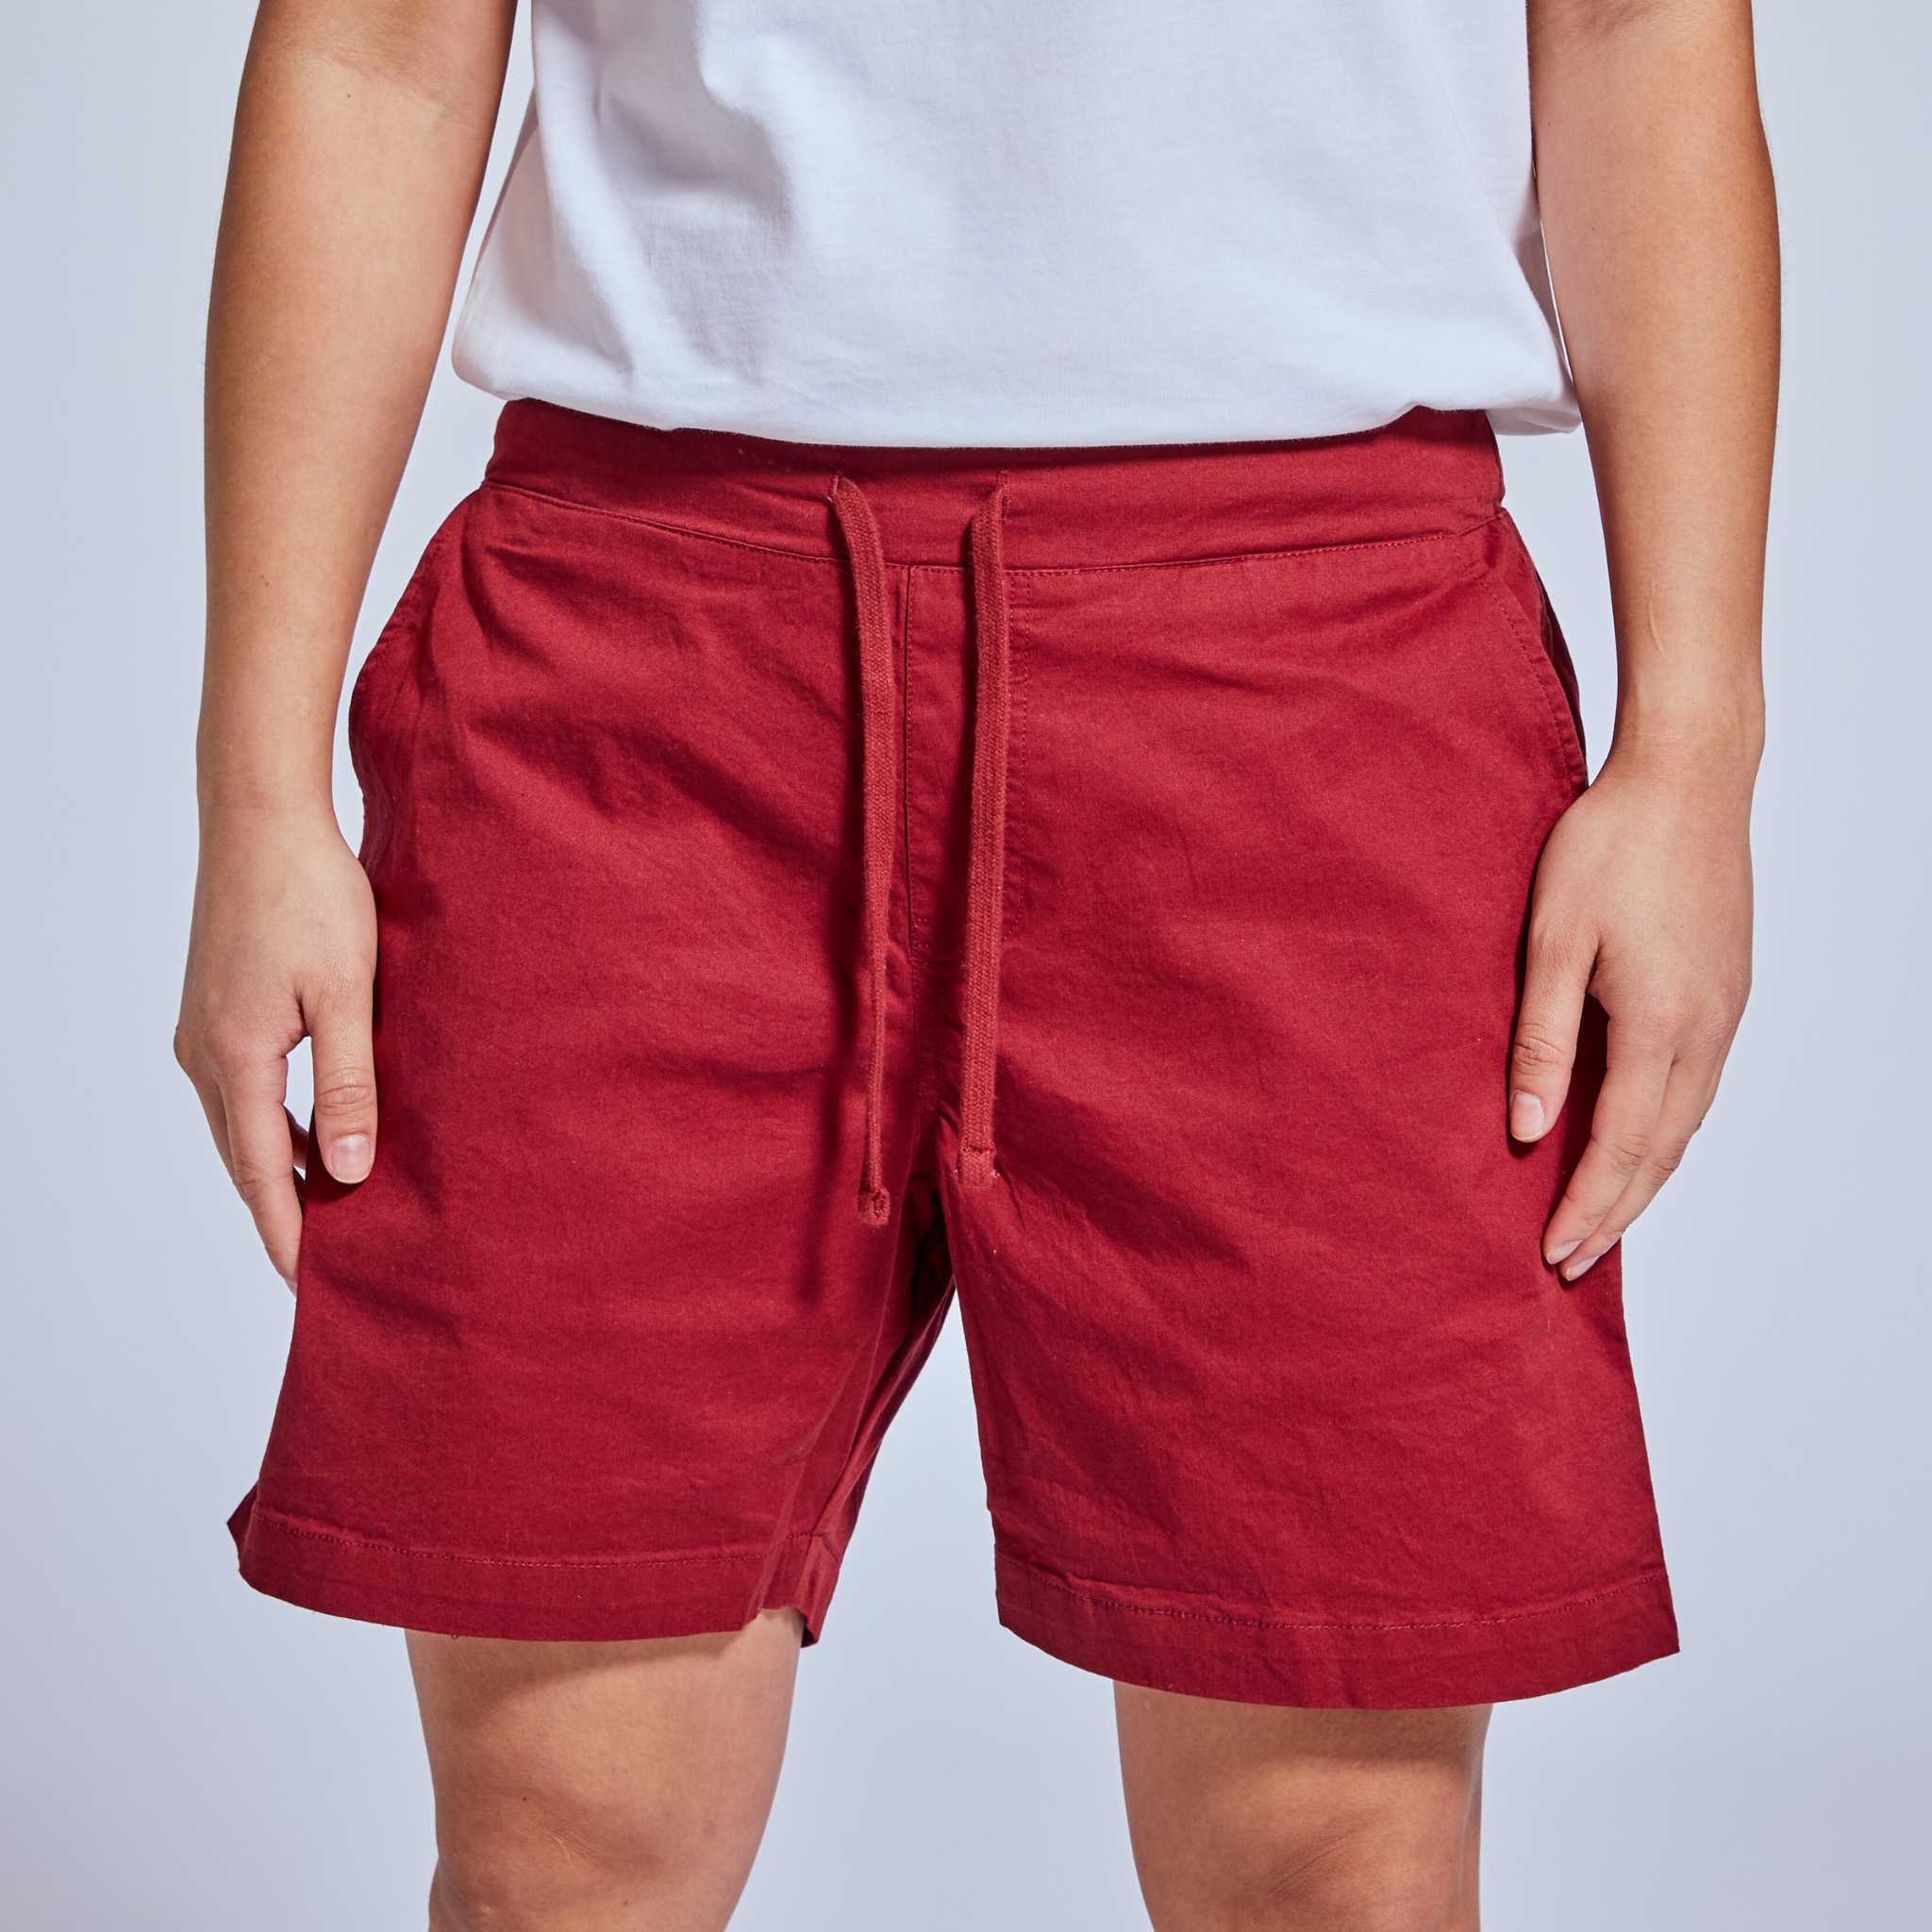 cherry red drawstring shorts for women